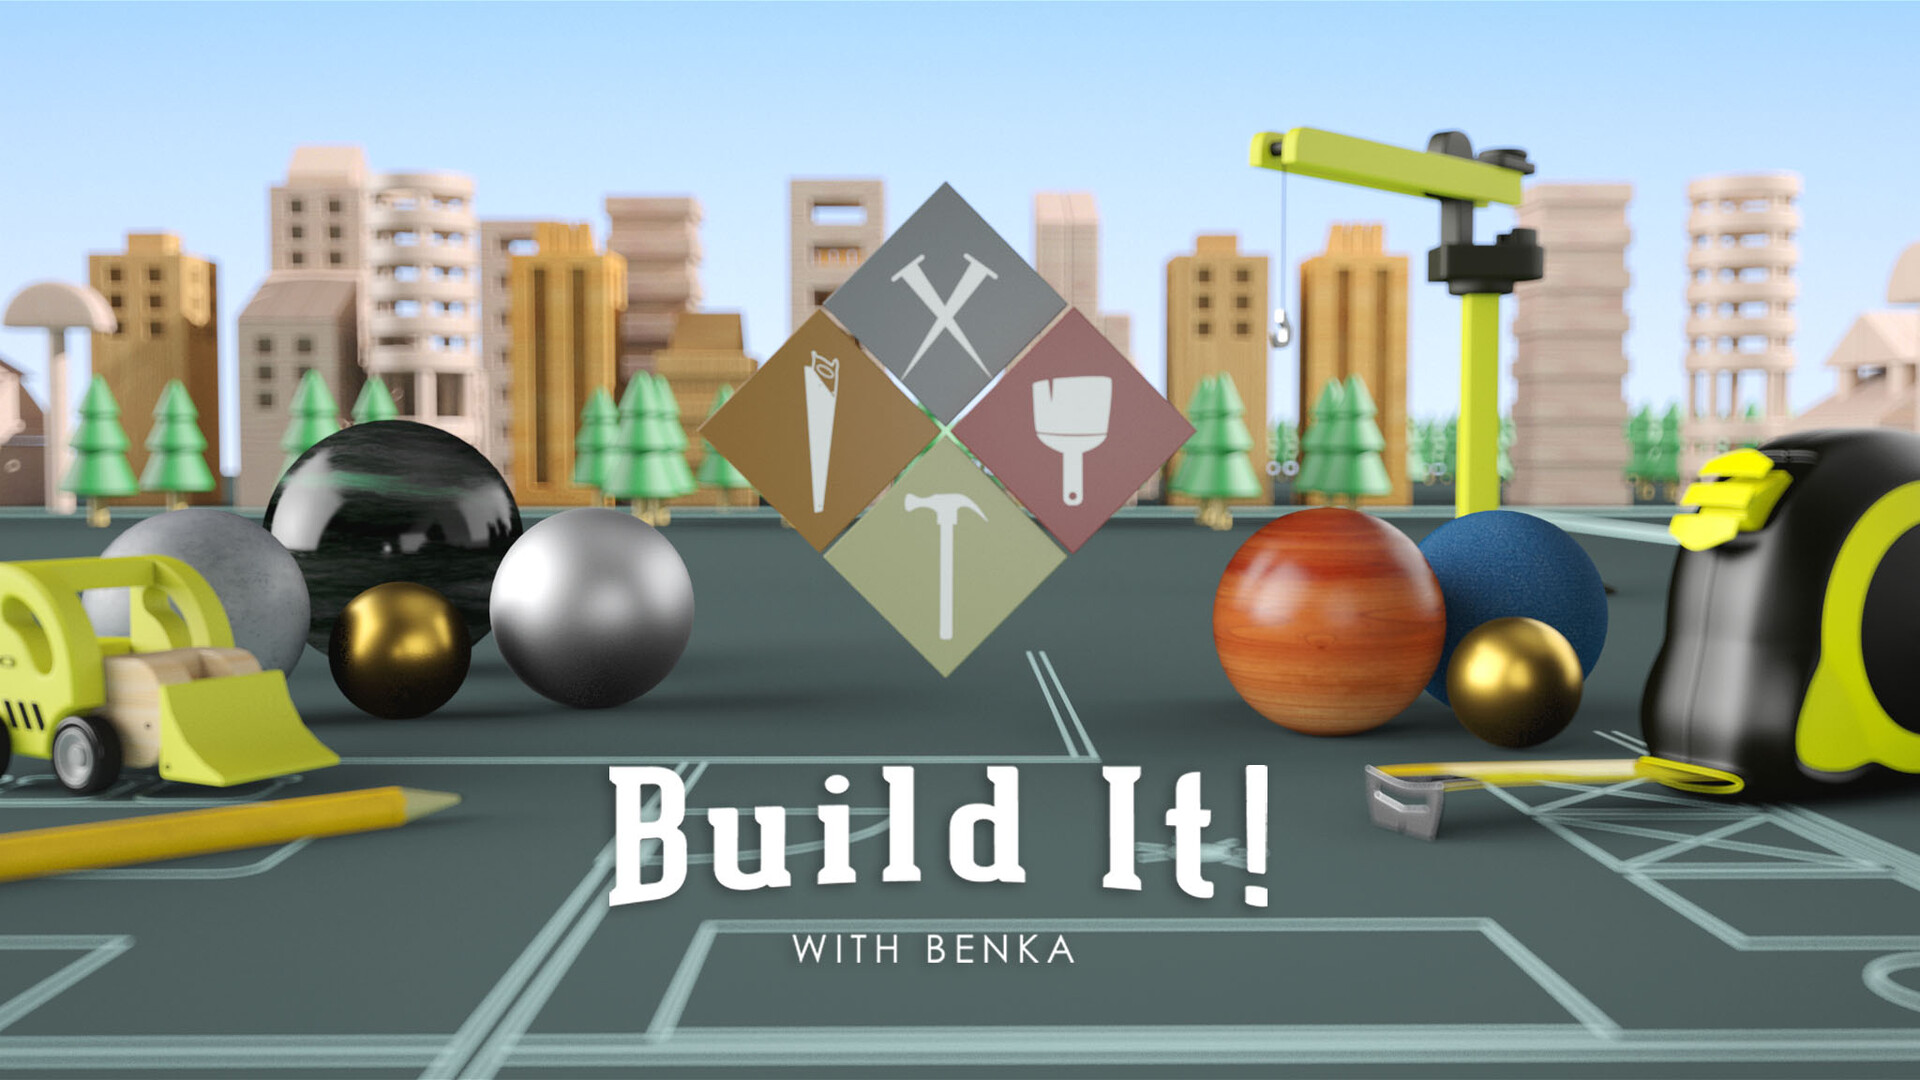 ArtStation - Build It with Benka